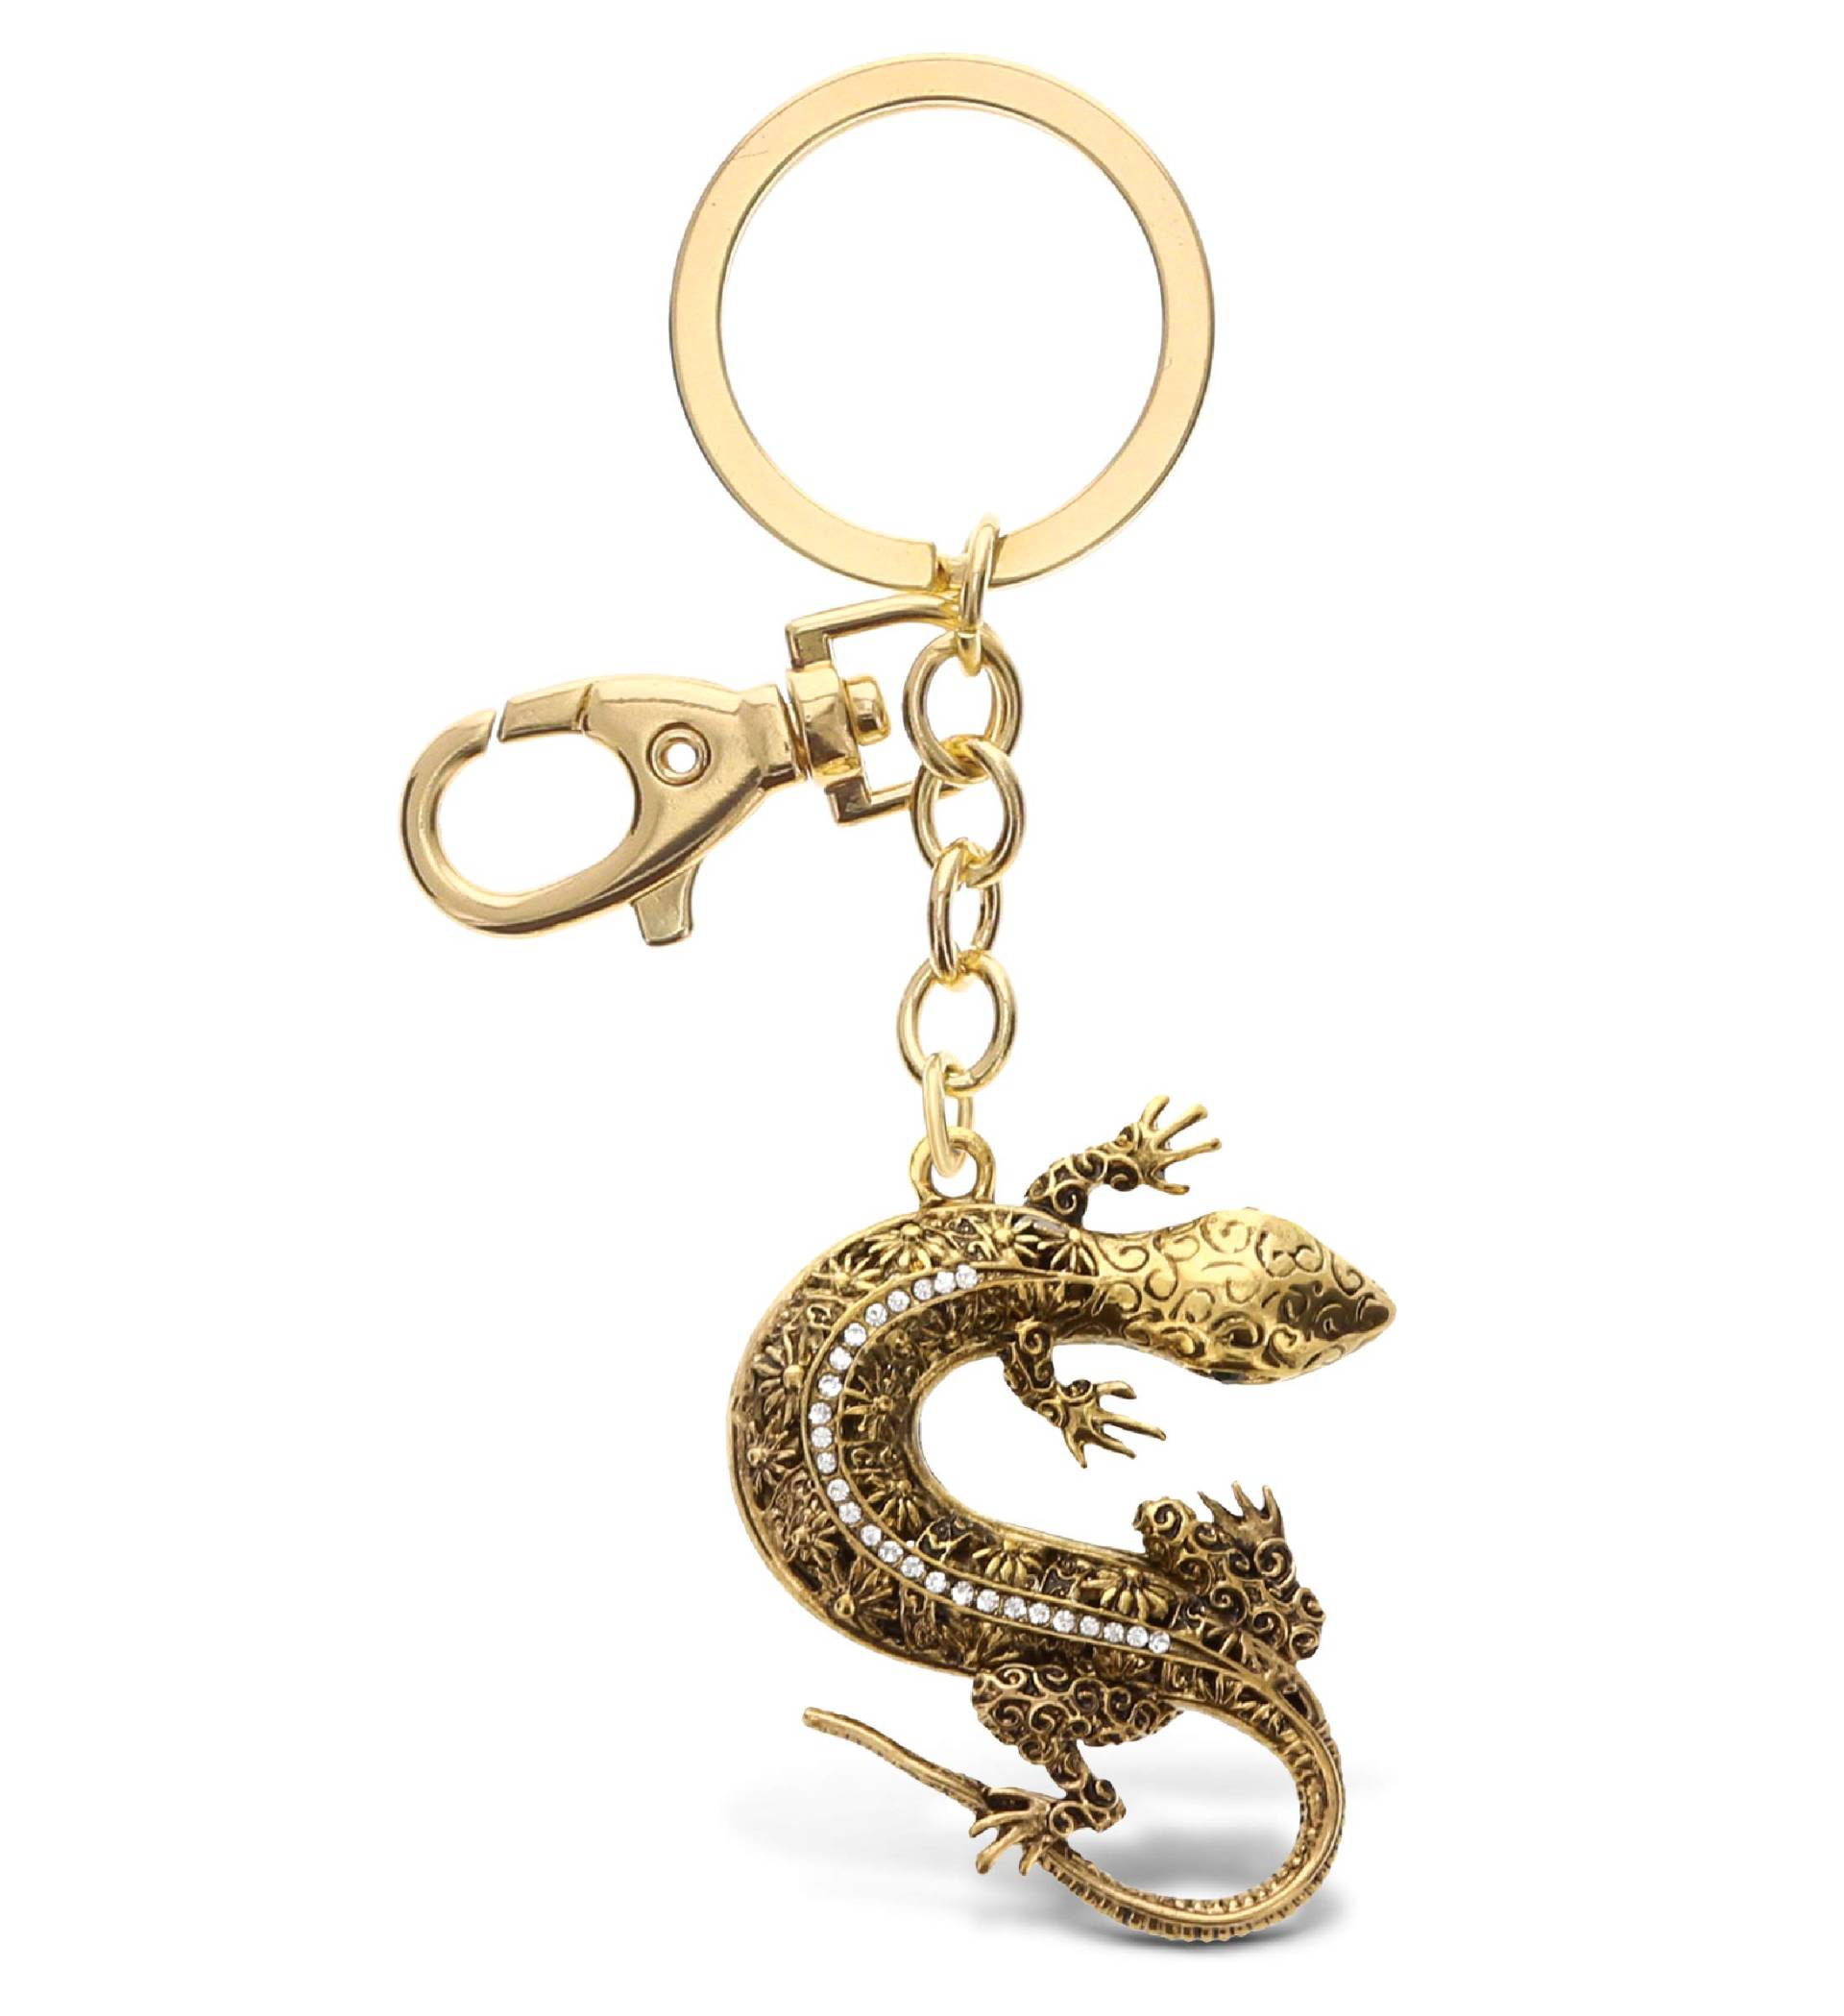 CoTa Global Aqua79 Gecko Schlüsselanhänger – Gold 3D Funkelnde Charme Strass Mode Stilvolle Metalllegierung Langlebig Schlüsselanhänger Bling Kristall Schmuck Zubehör mit Verschluss, Gold, 10 cm von CoTa Global